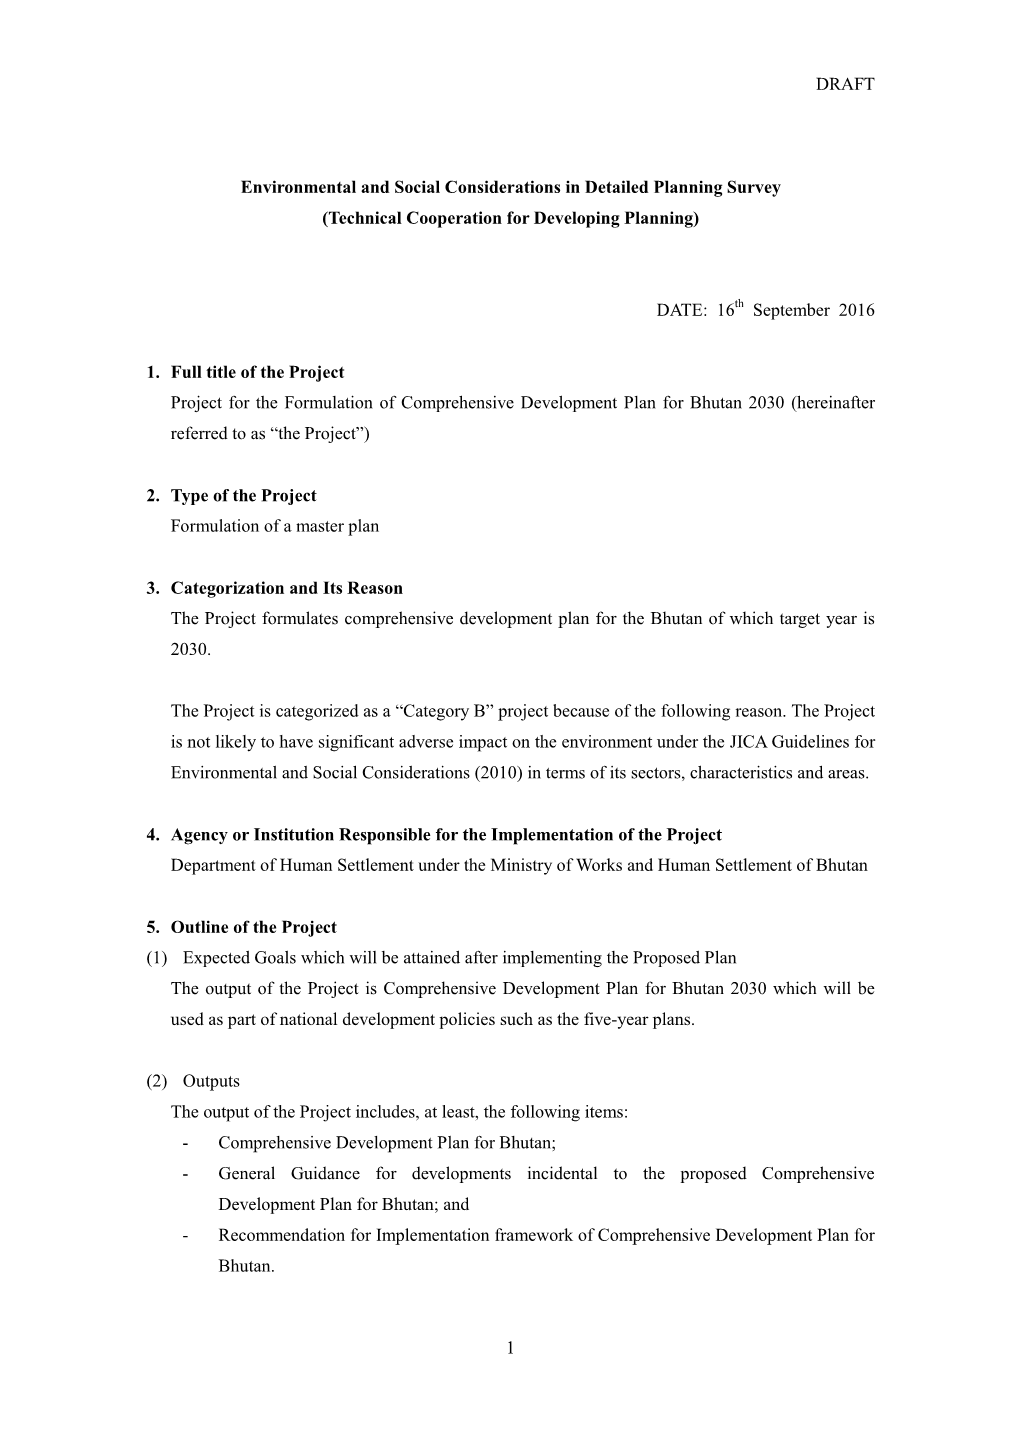 DRAFT 1 Environmental and Social Considerations in Detailed